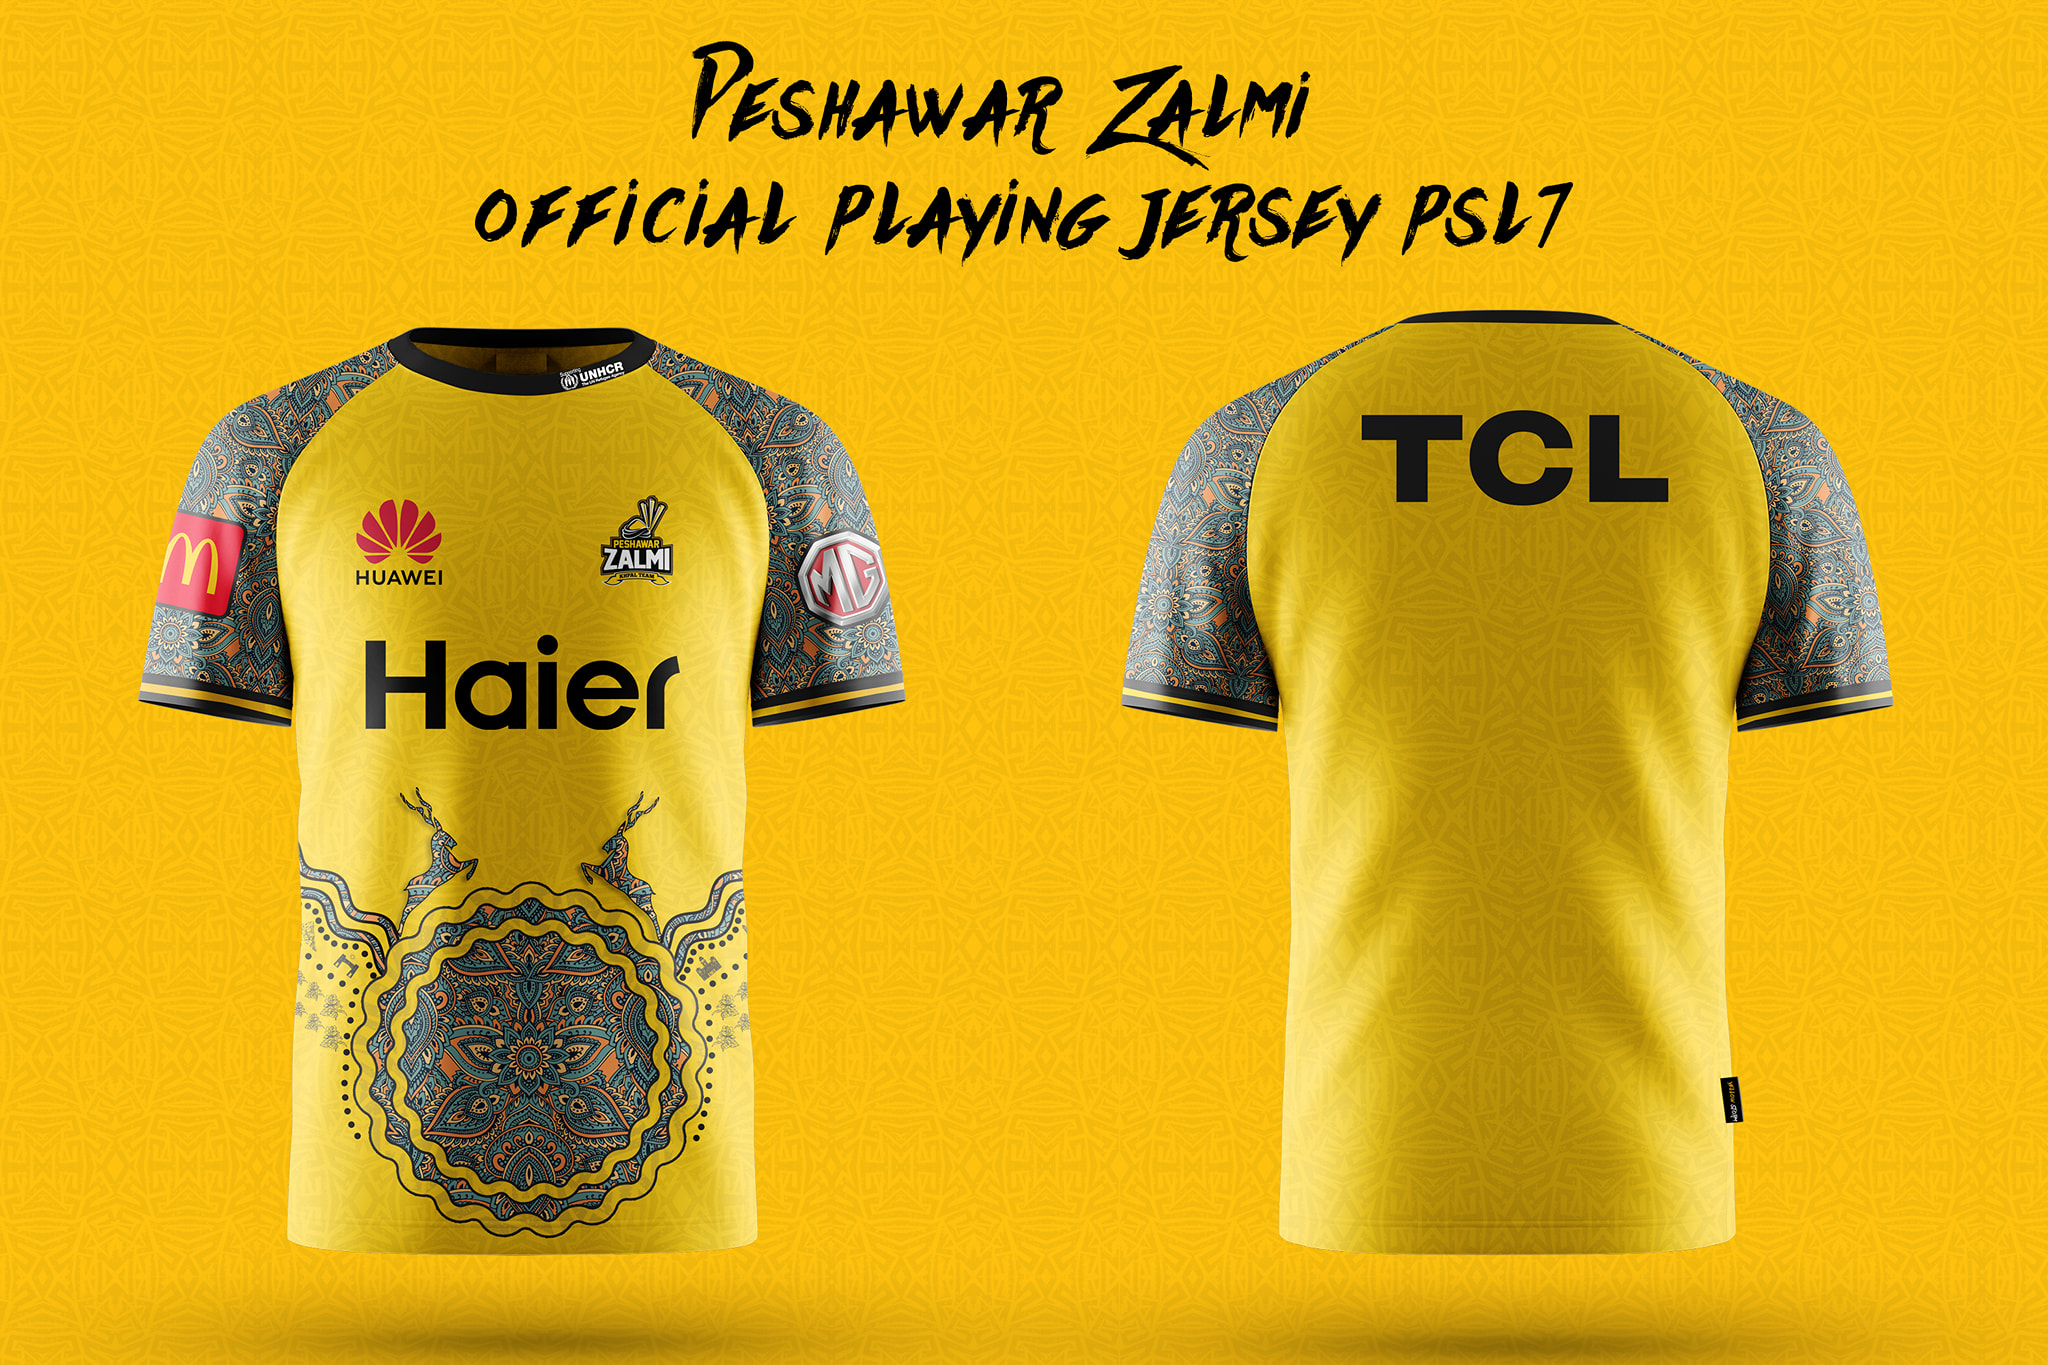 PSL 7 Peshawar Zalmi Kit, Jersey, Shirt